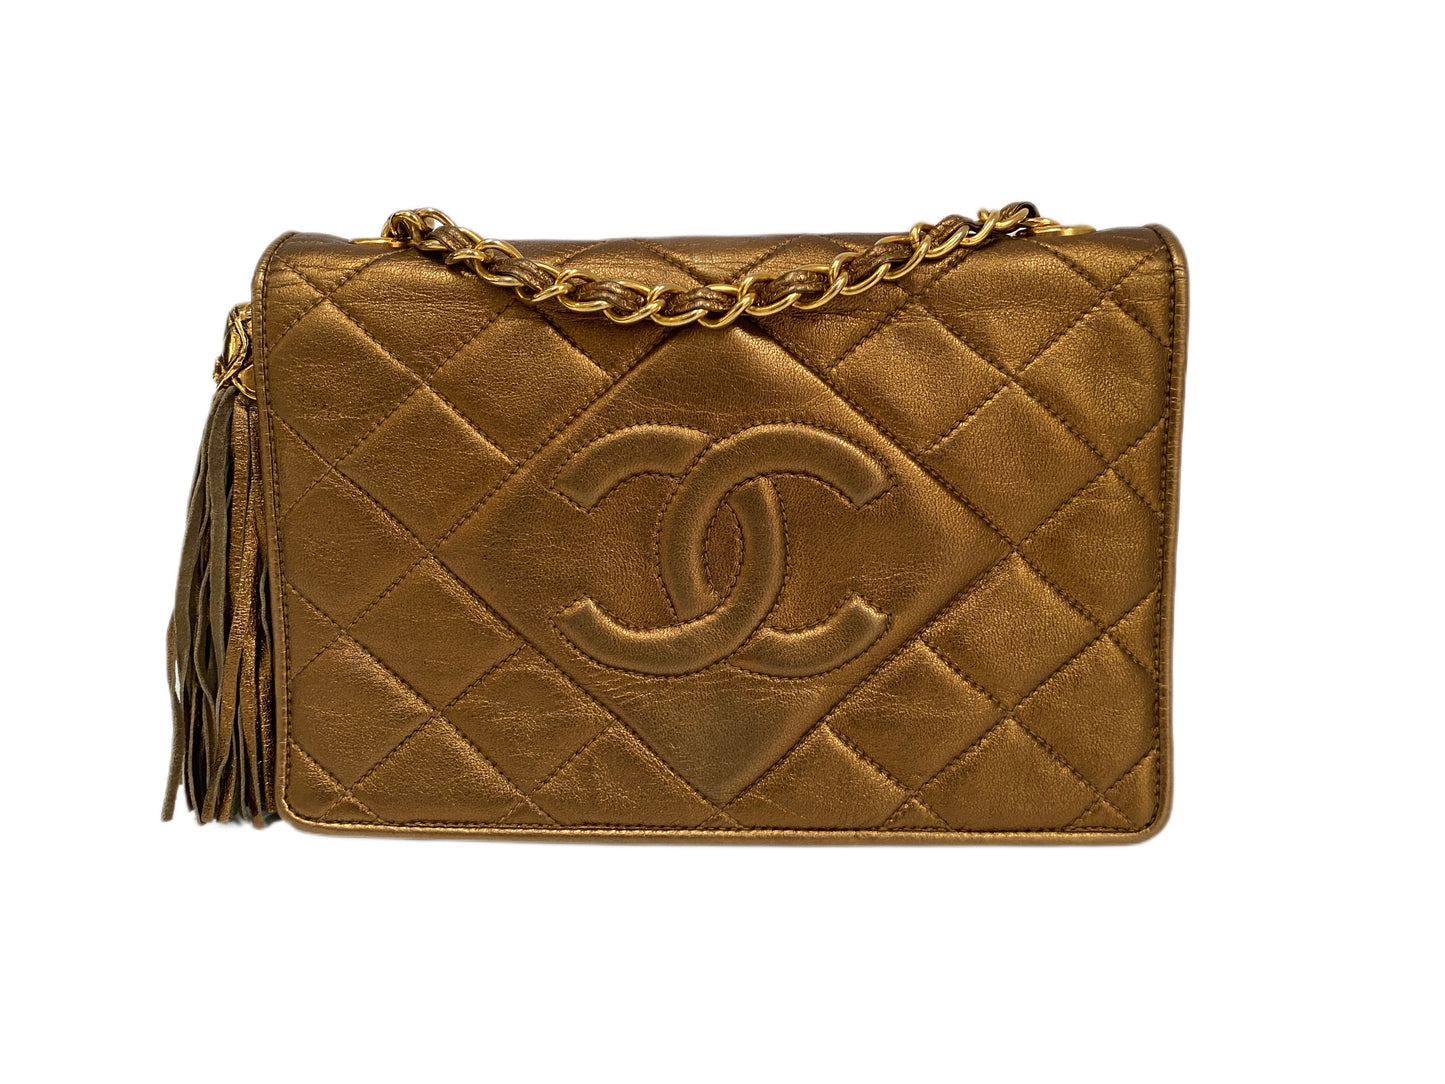 Chanel Diamond Quilted Metallic Shoulder Bag